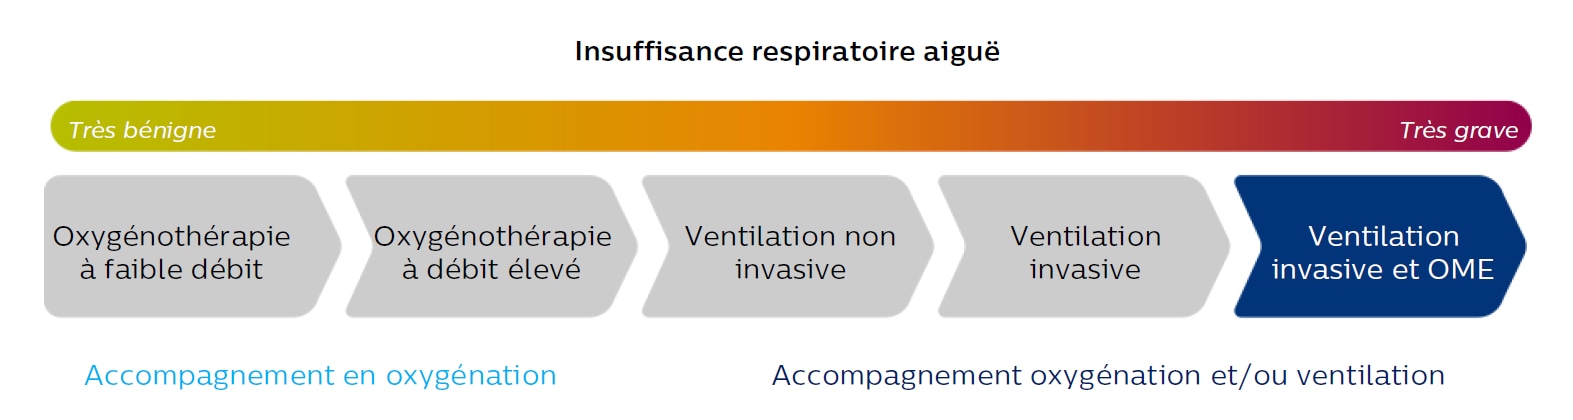 Ventilation invasive et OME